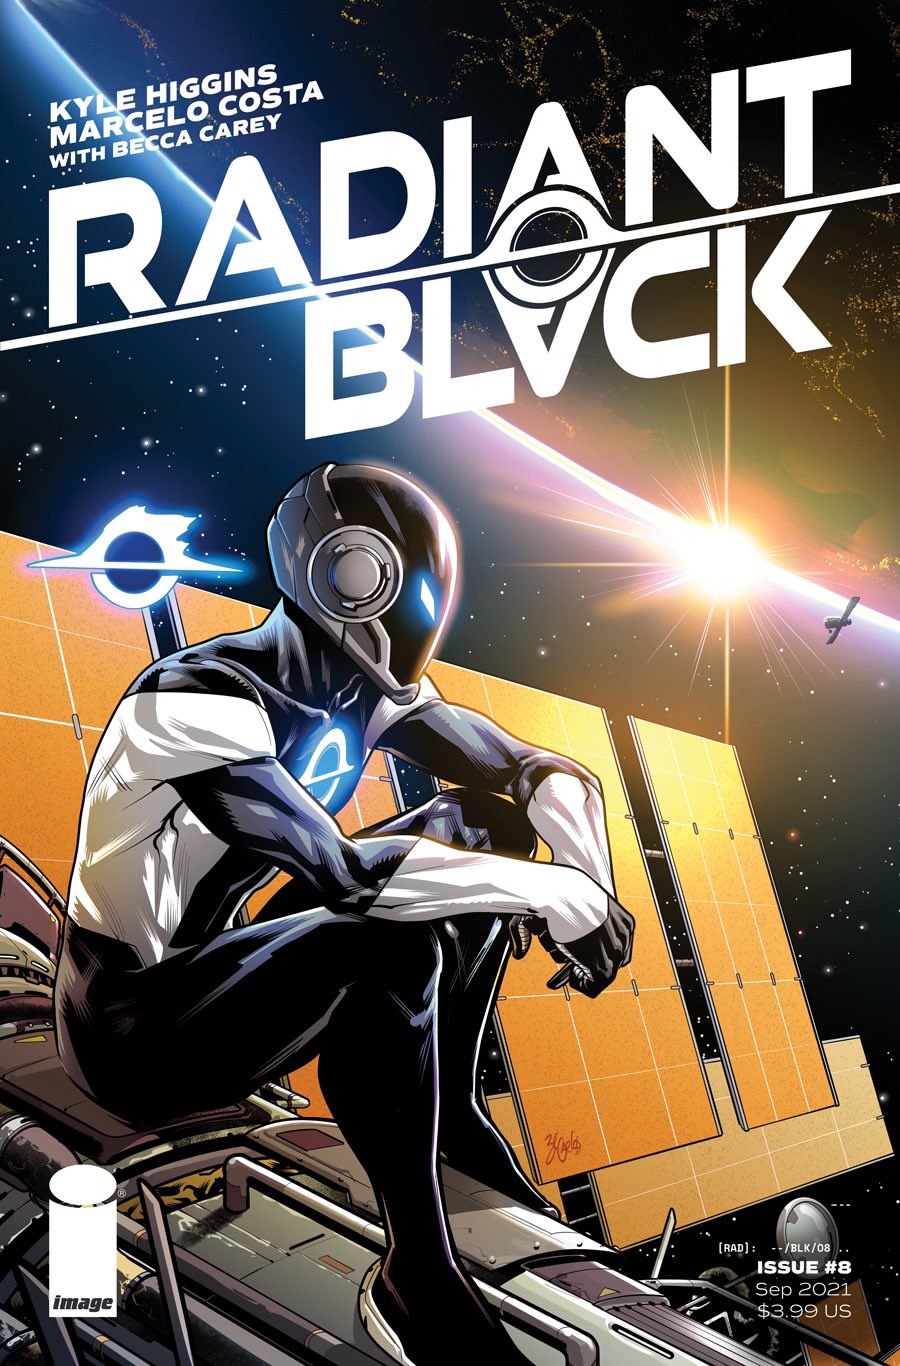 radiant black comics